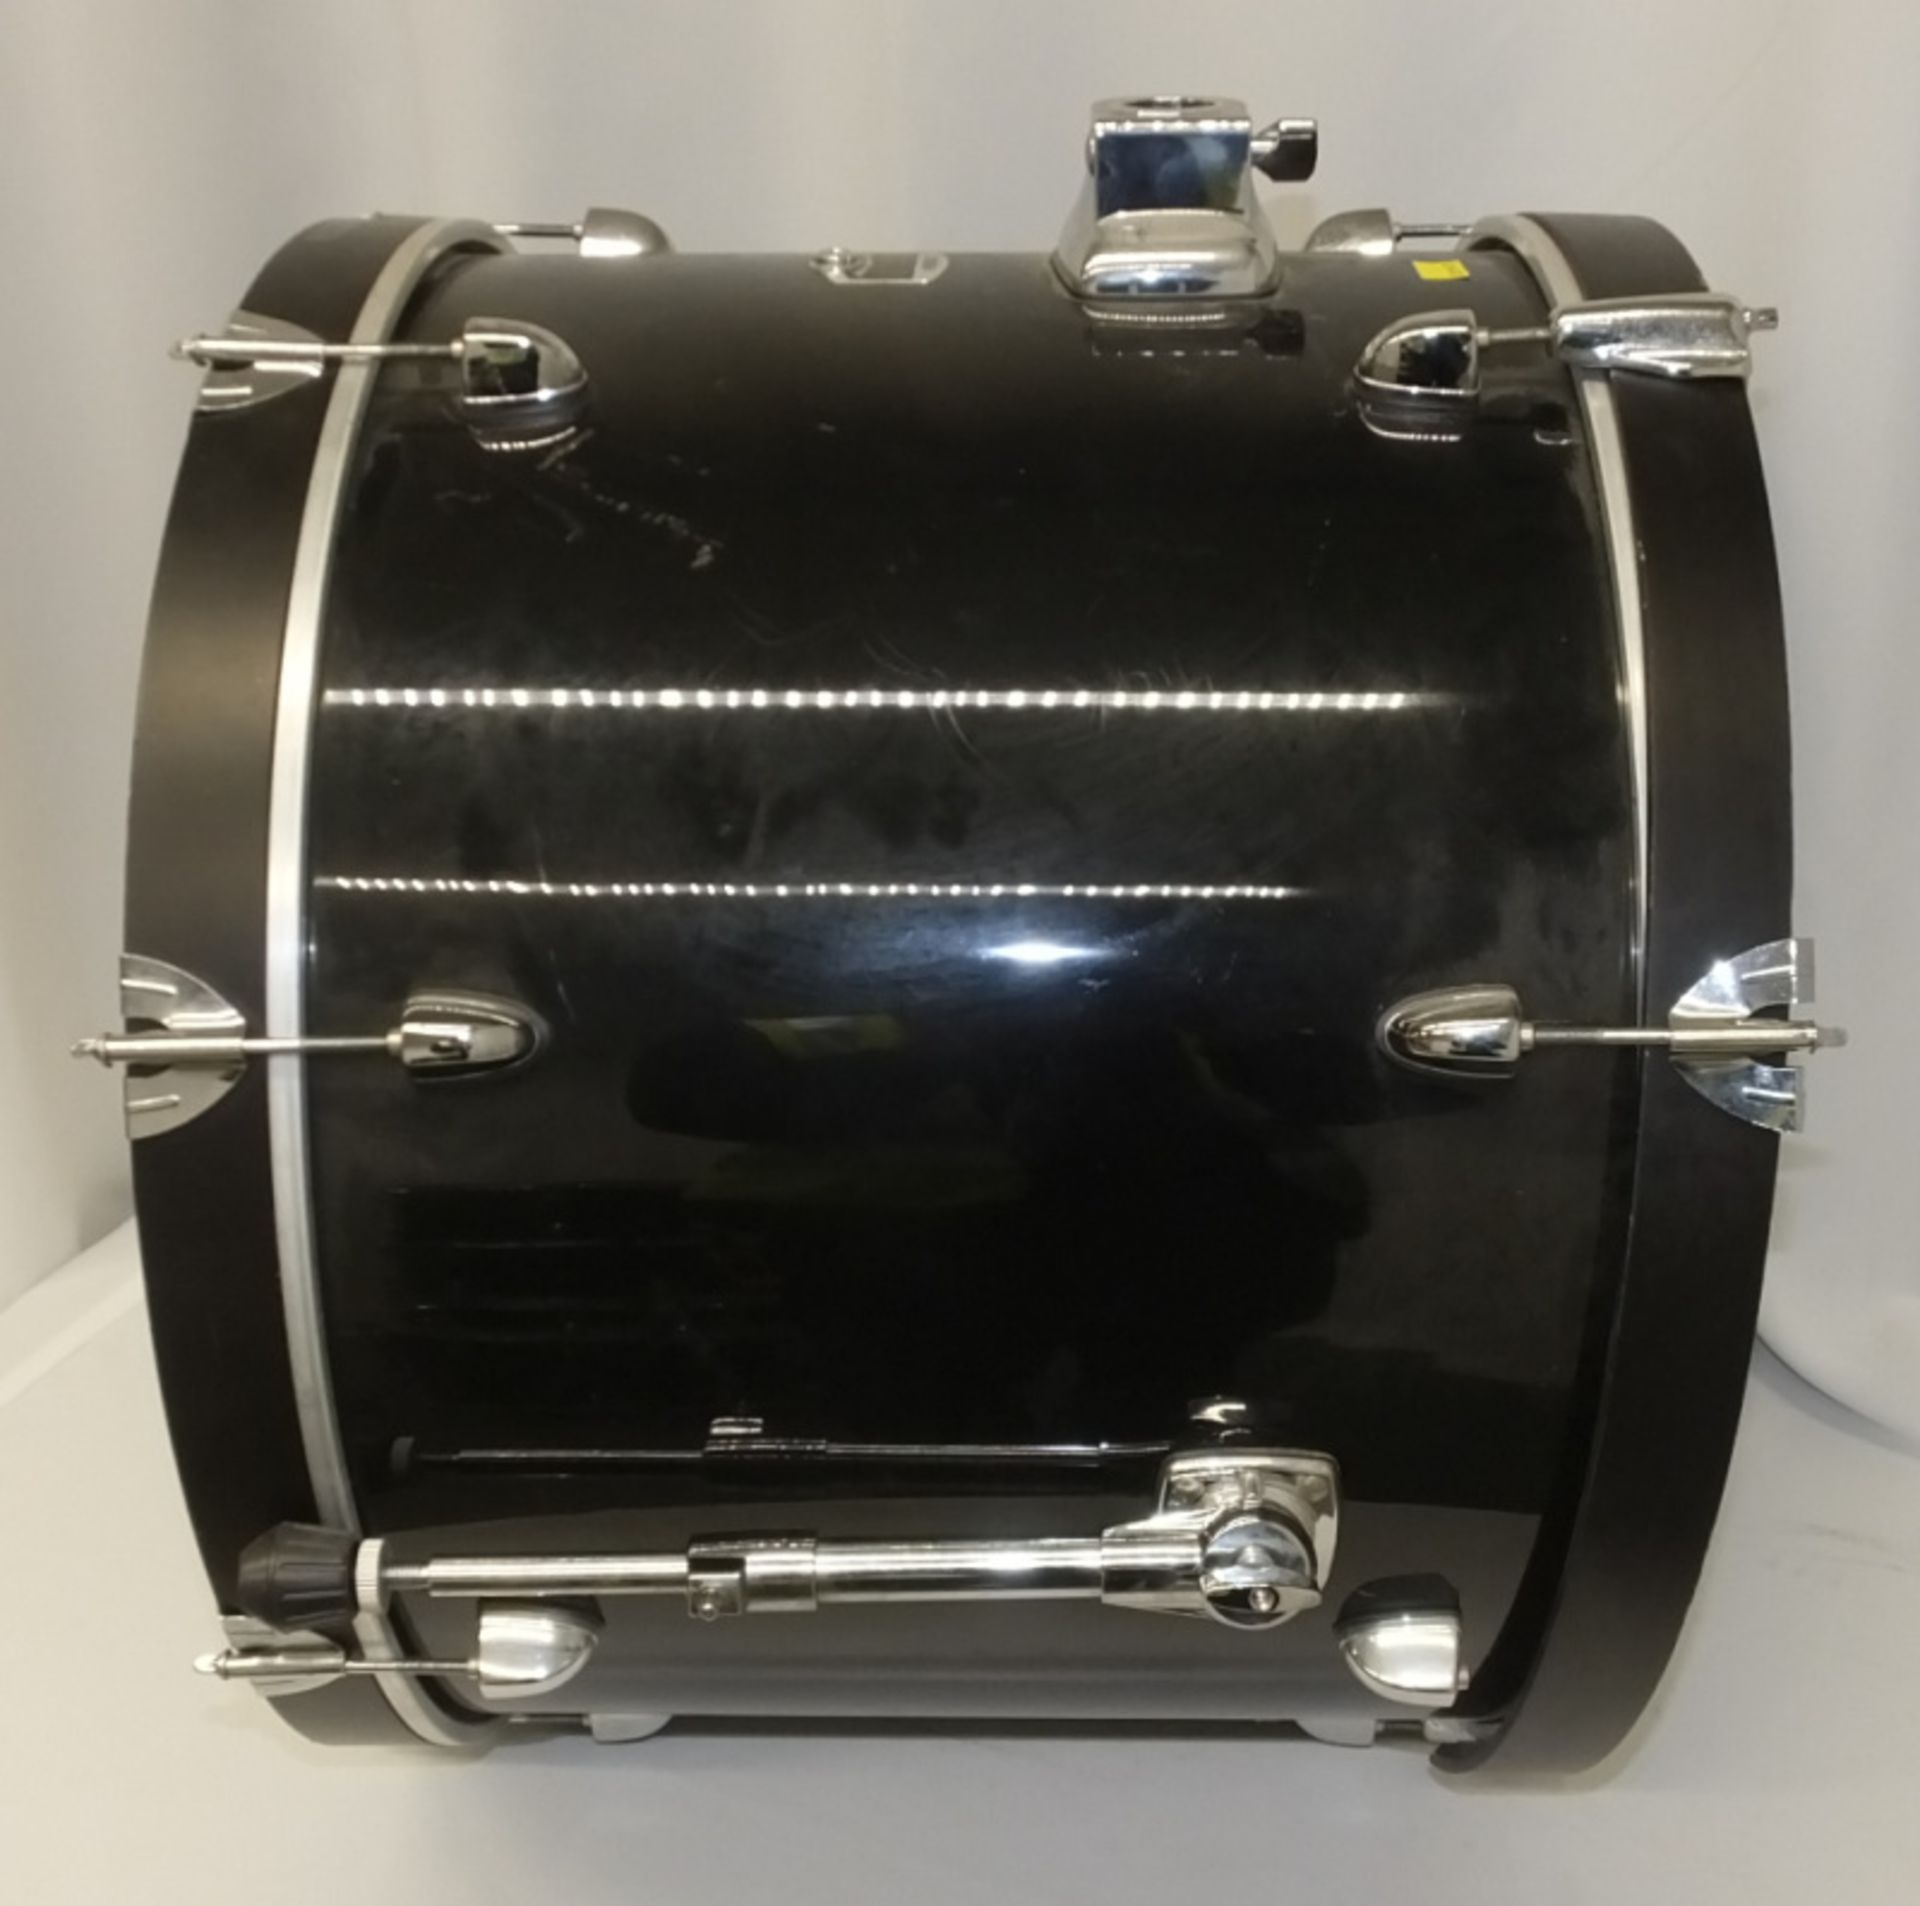 Yamaha Gigmaker Drum Kit - details in the description - Image 9 of 31